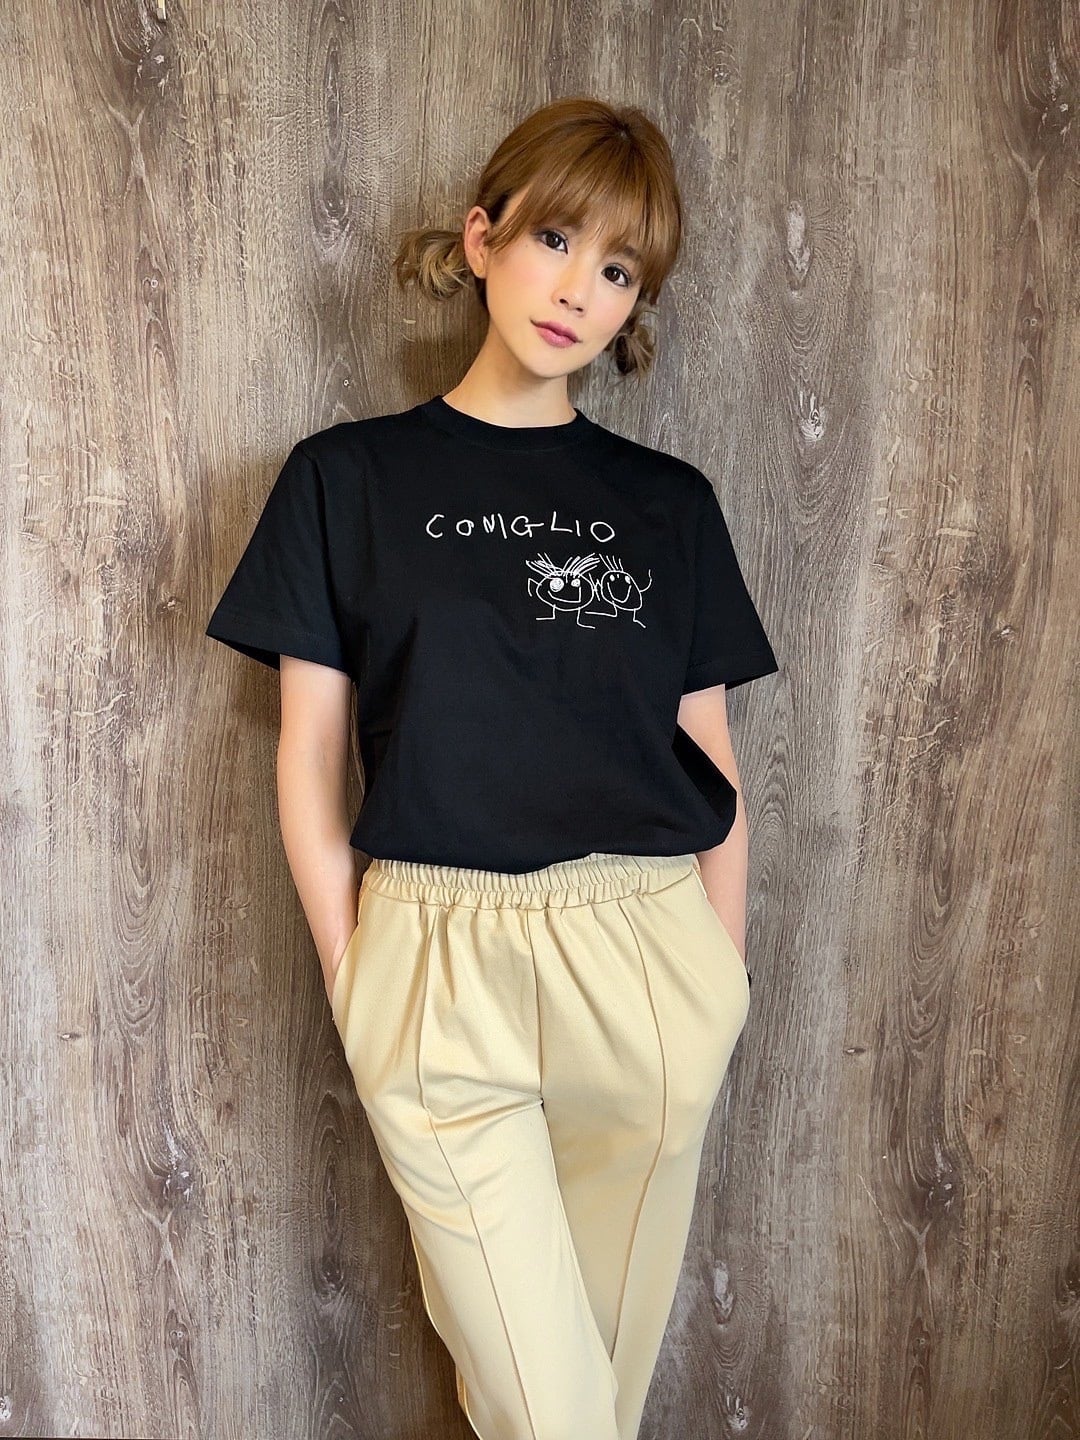 Coniglio 手書きロゴとイラストtシャツ Coniglio コニーリョ 子供服